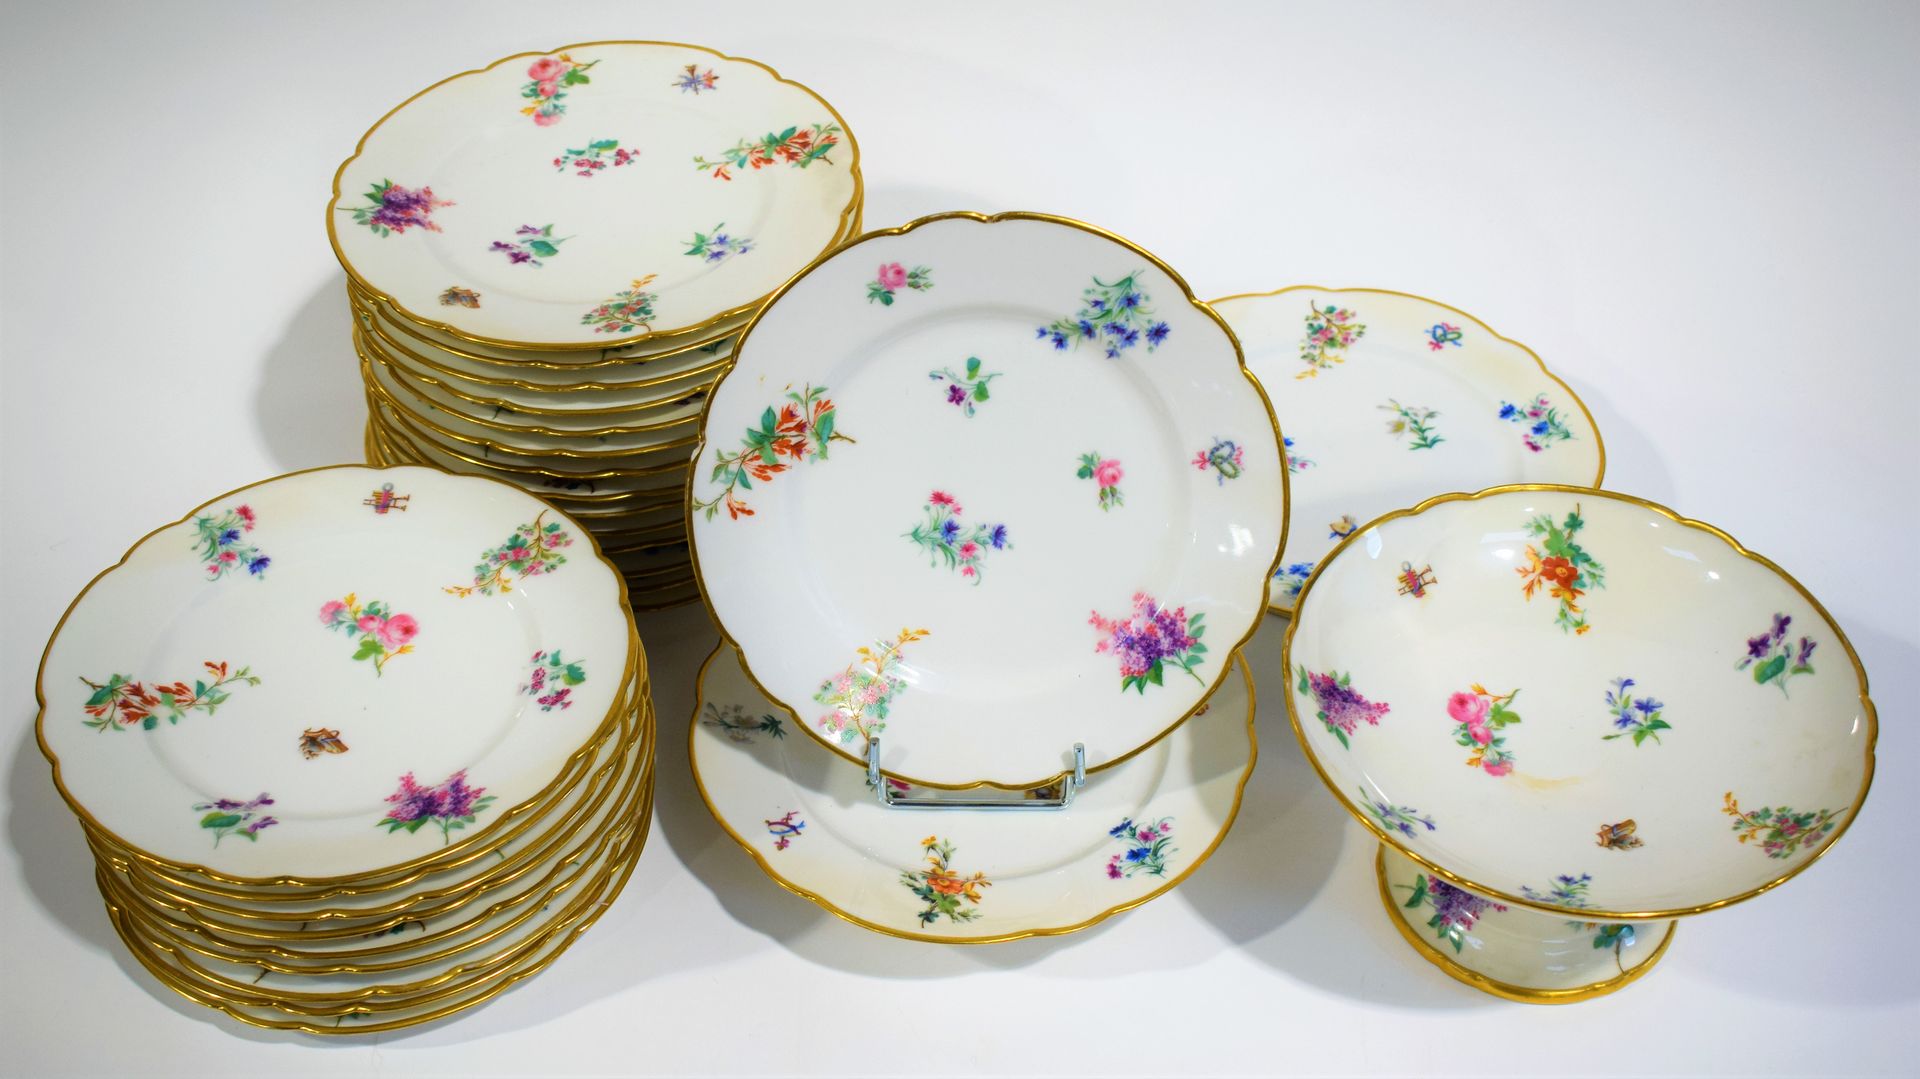 Null 塞夫勒：一套漂亮的24个盘子，2个蛋糕架和1个瓷盘，属于塞夫勒工厂，19世纪上半叶，装饰有最漂亮的花卉和乐器，图案美丽清新，镶金边，盘子直径21厘米
&hellip;